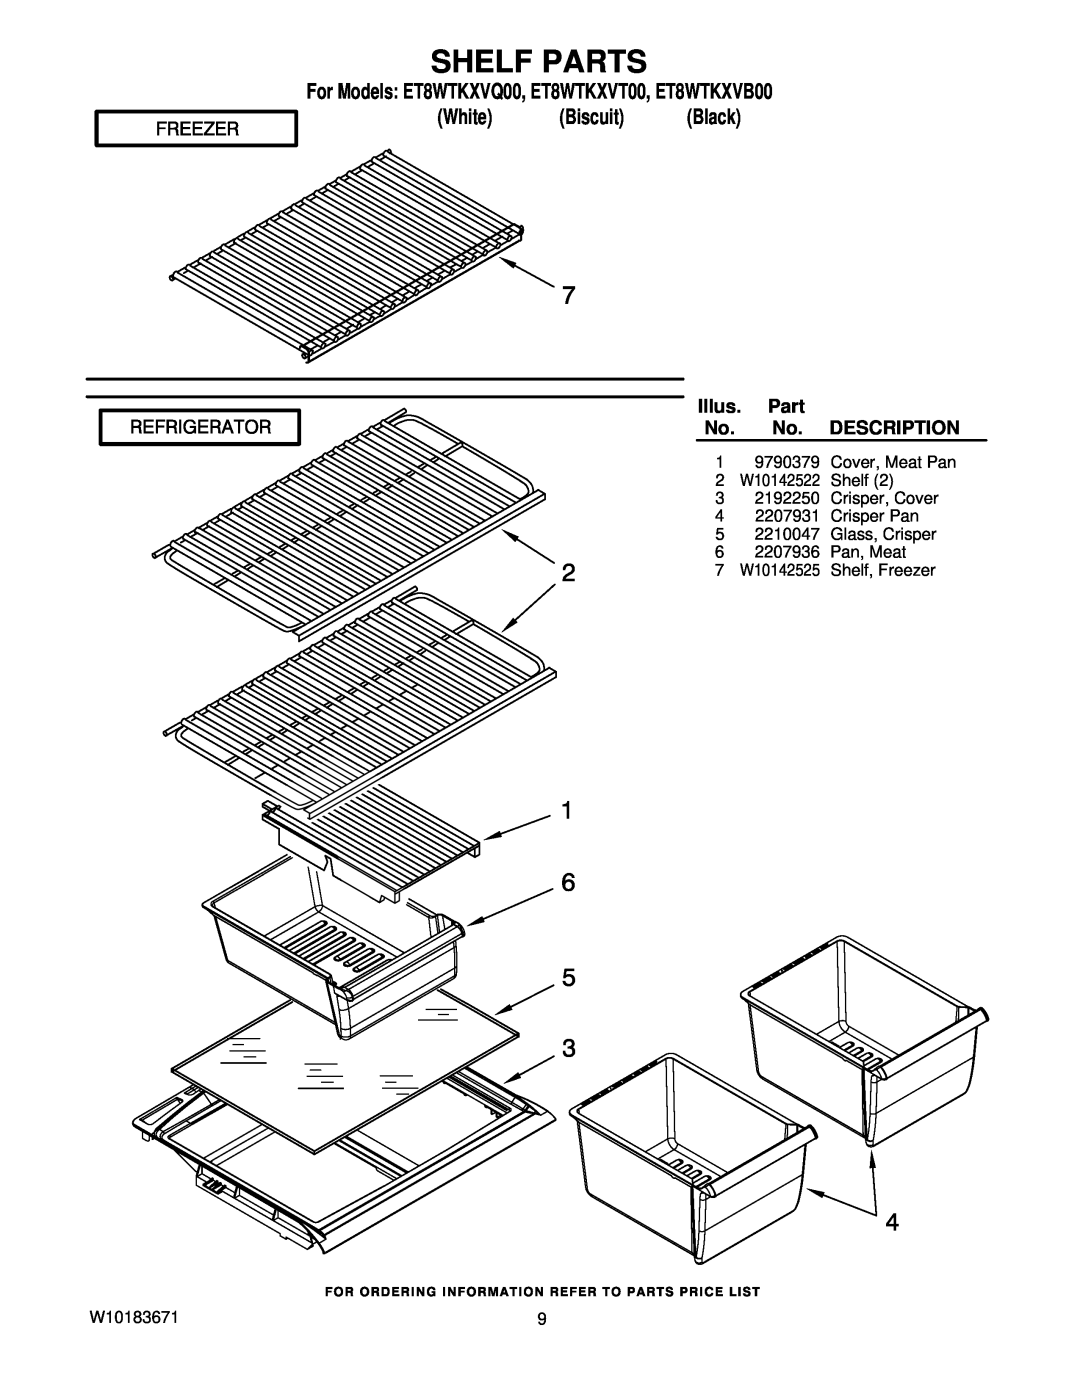 Whirlpool Shelf Parts, Illus. Part, For Models ET8WTKXVQ00, ET8WTKXVT00, ET8WTKXVB00 White Biscuit Black, Description 